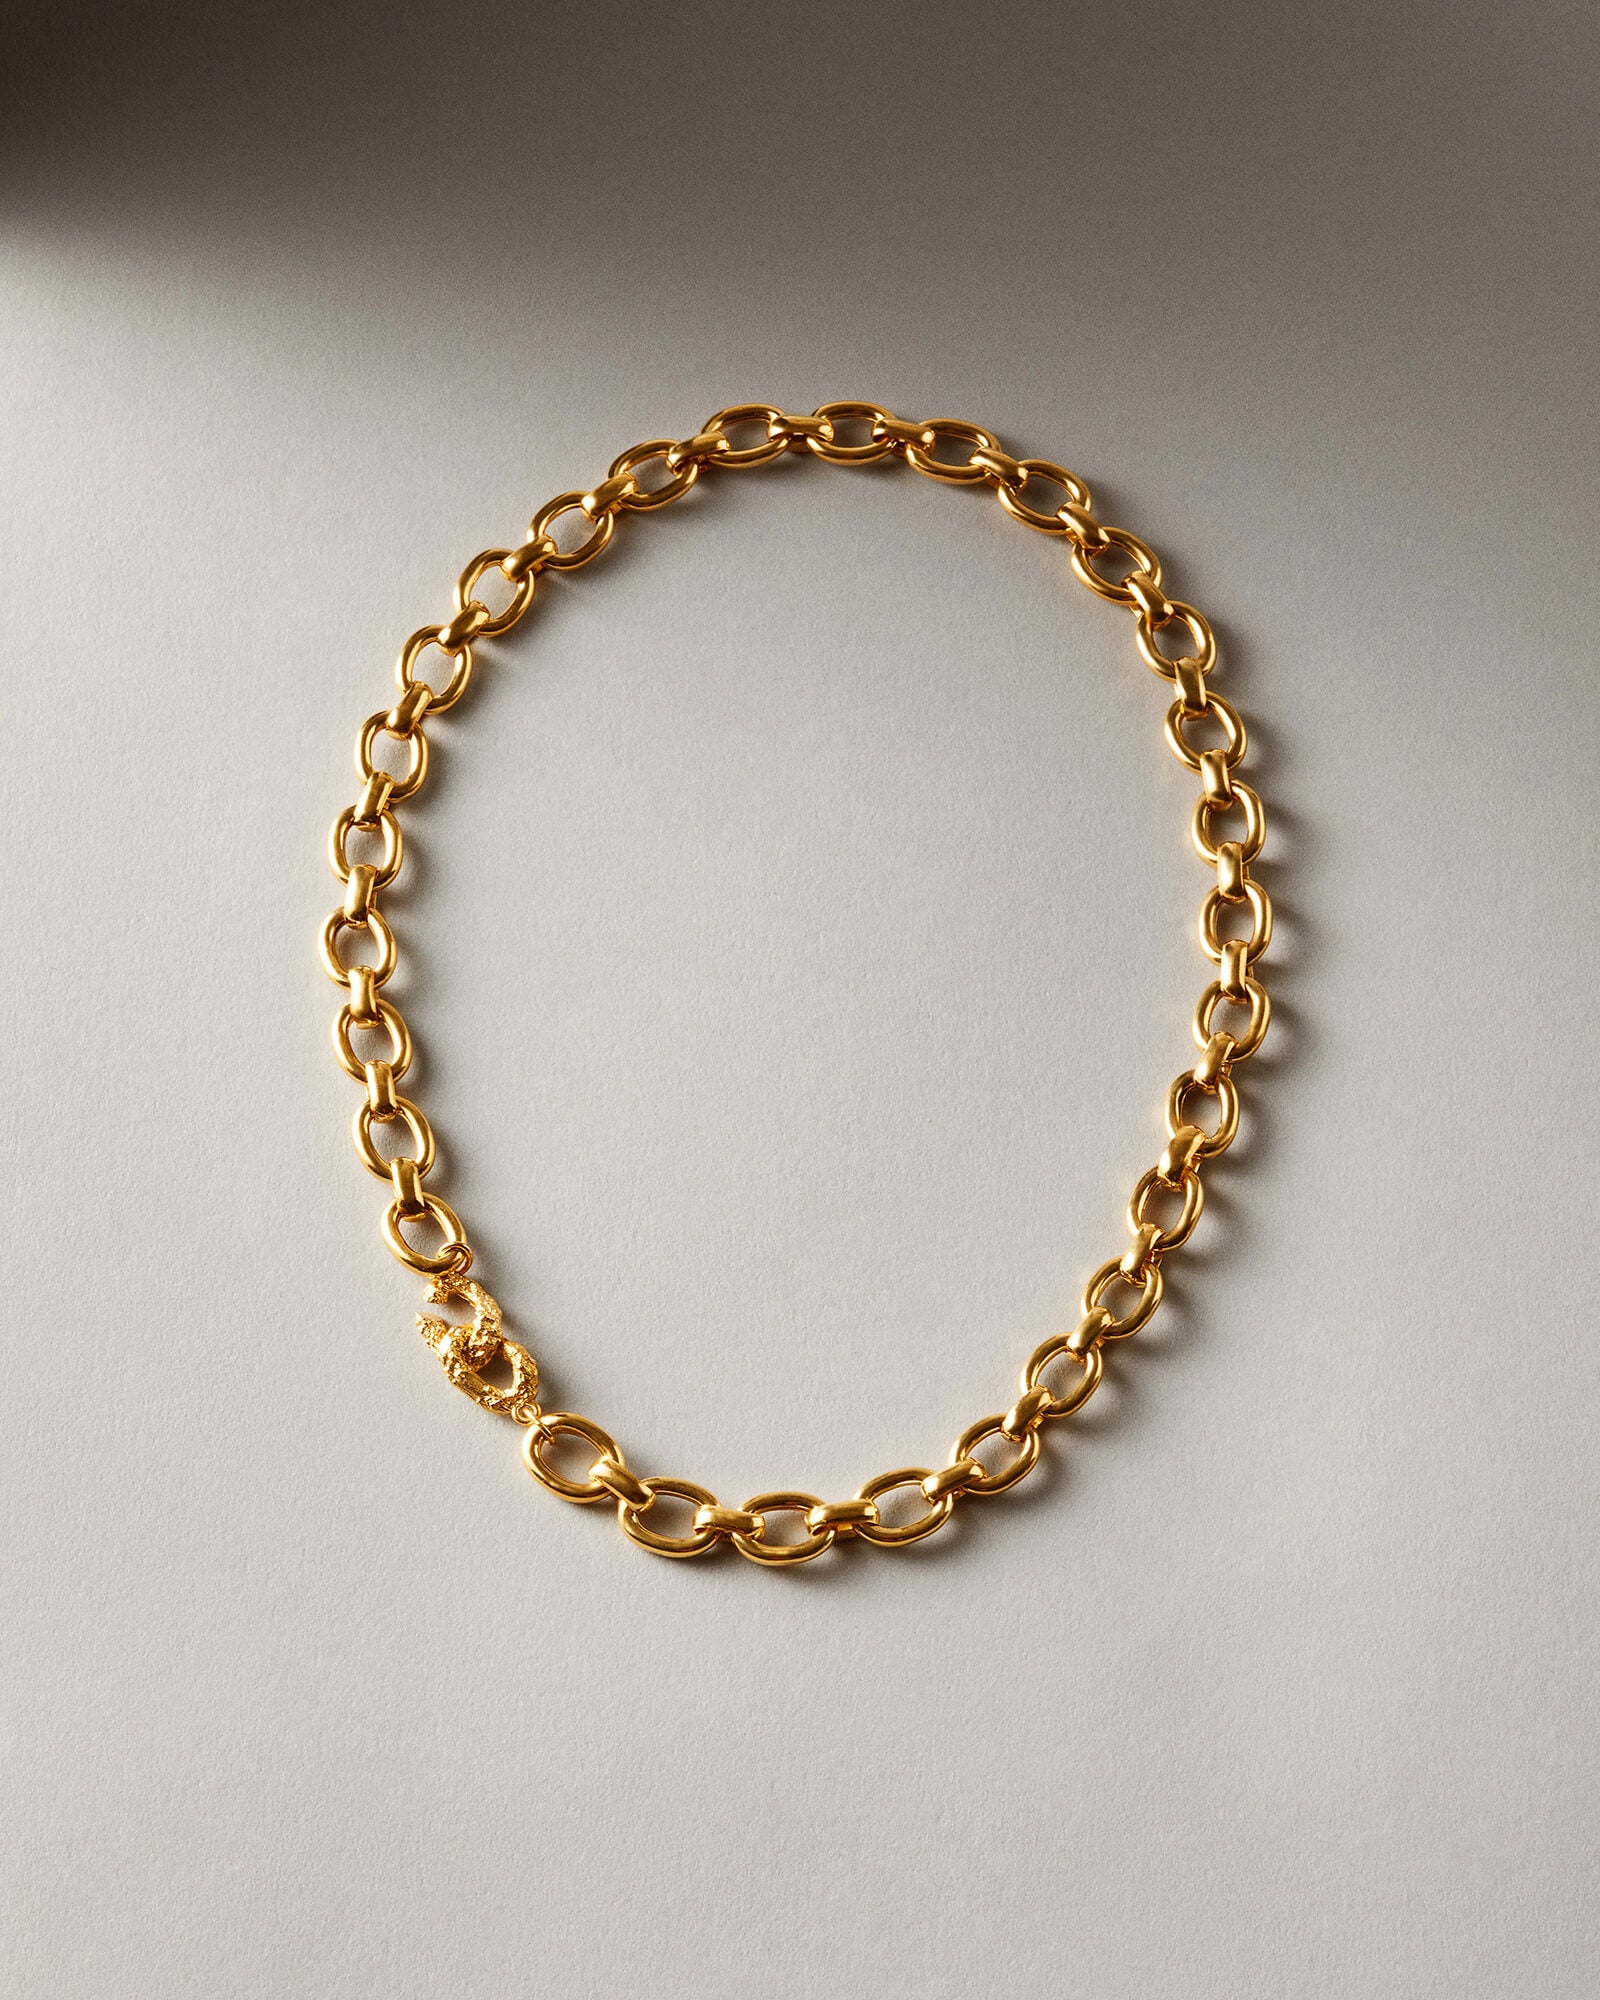 Delicate Loop in Loop Necklace — Korte Jewelry Designs